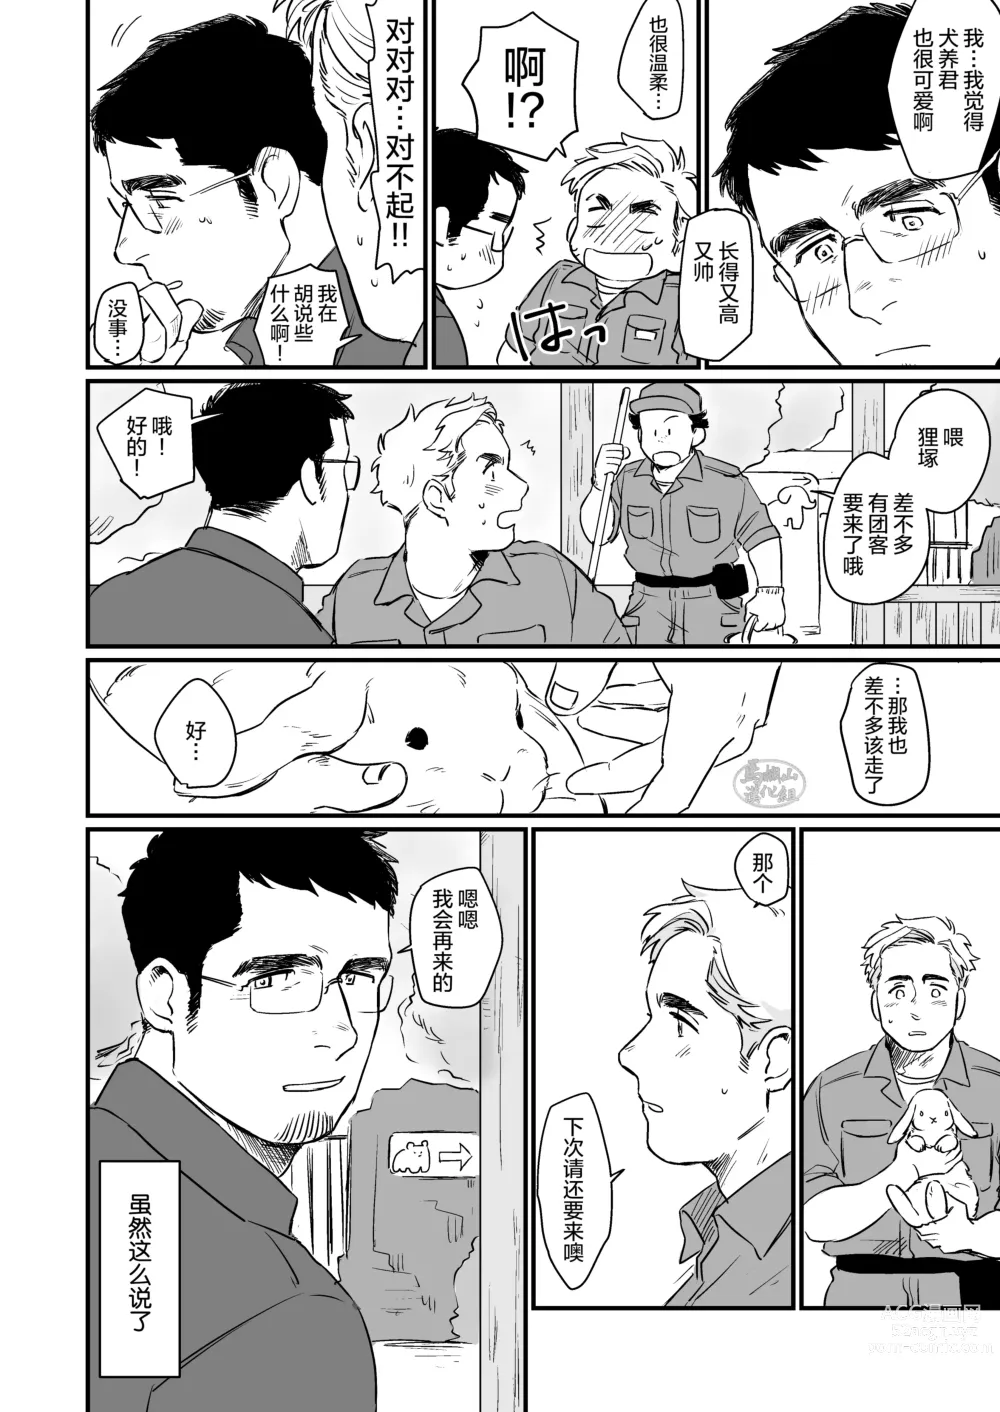 Page 8 of manga ビースティコンプレックス.动物狂想曲